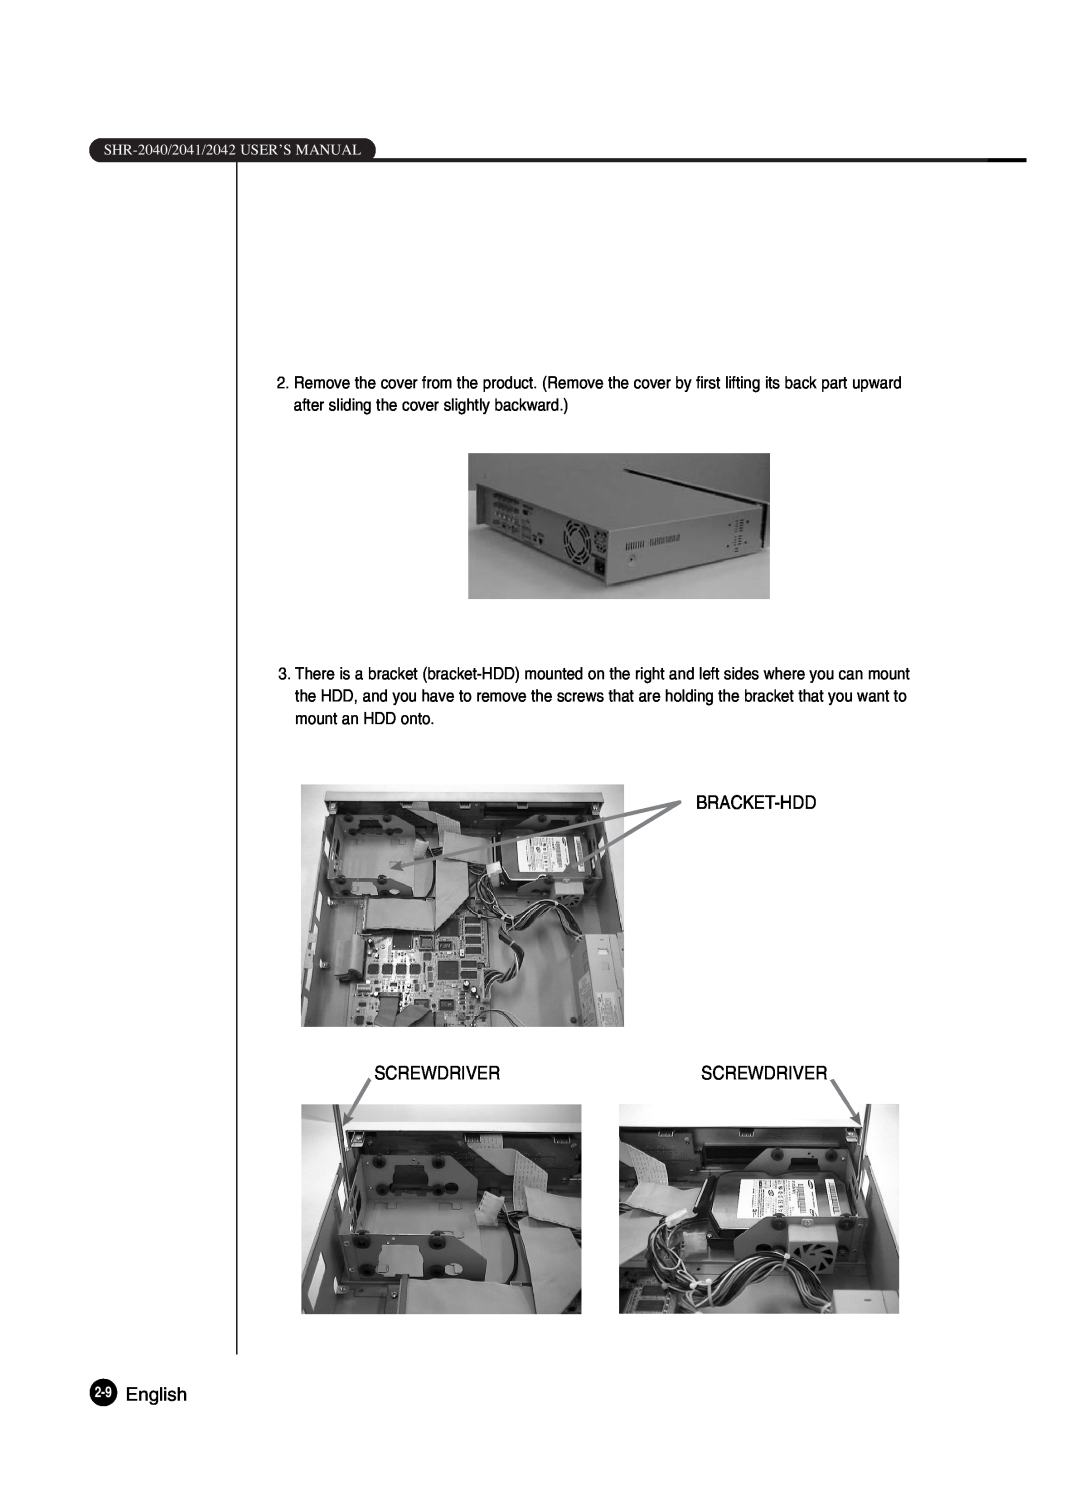 Samsung SHR-2042P250, SHR-2040P250 manual Bracket-Hdd Screwdriverscrewdriver, English, SHR-2040/2041/2042 USER’S MANUAL 